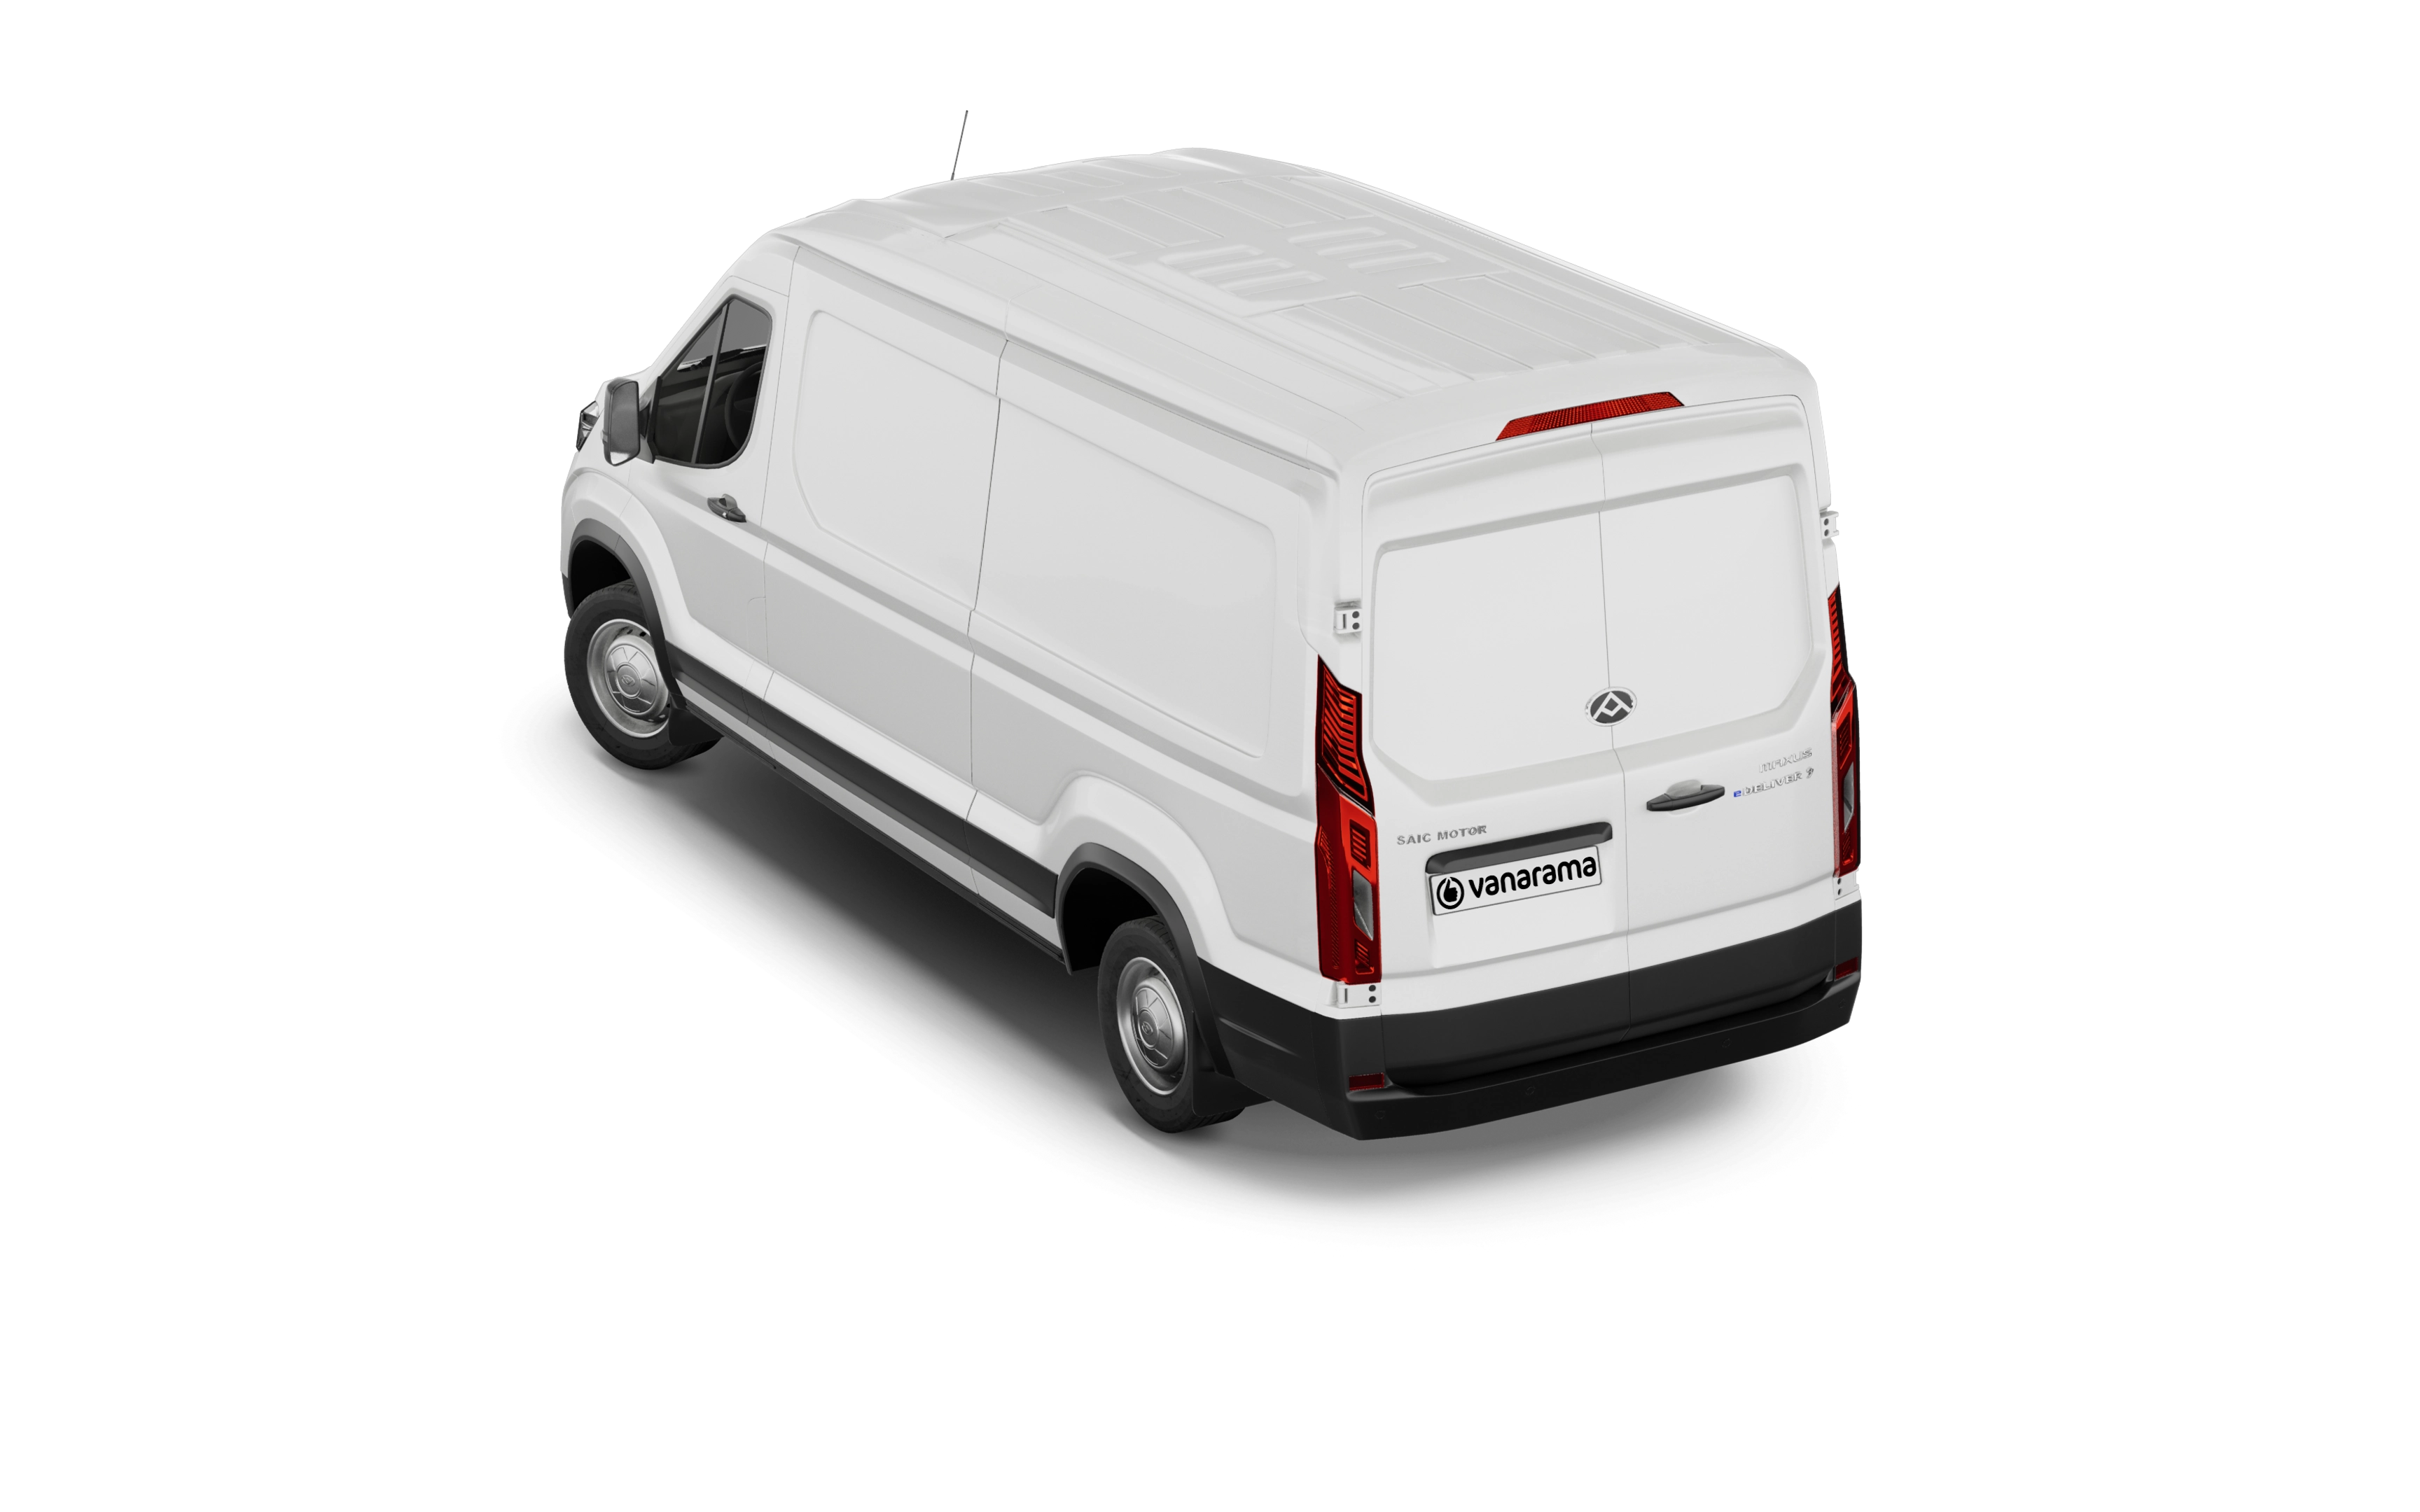 Maxus deliver 9 lwb fwd 2.0 d20 150 high roof van